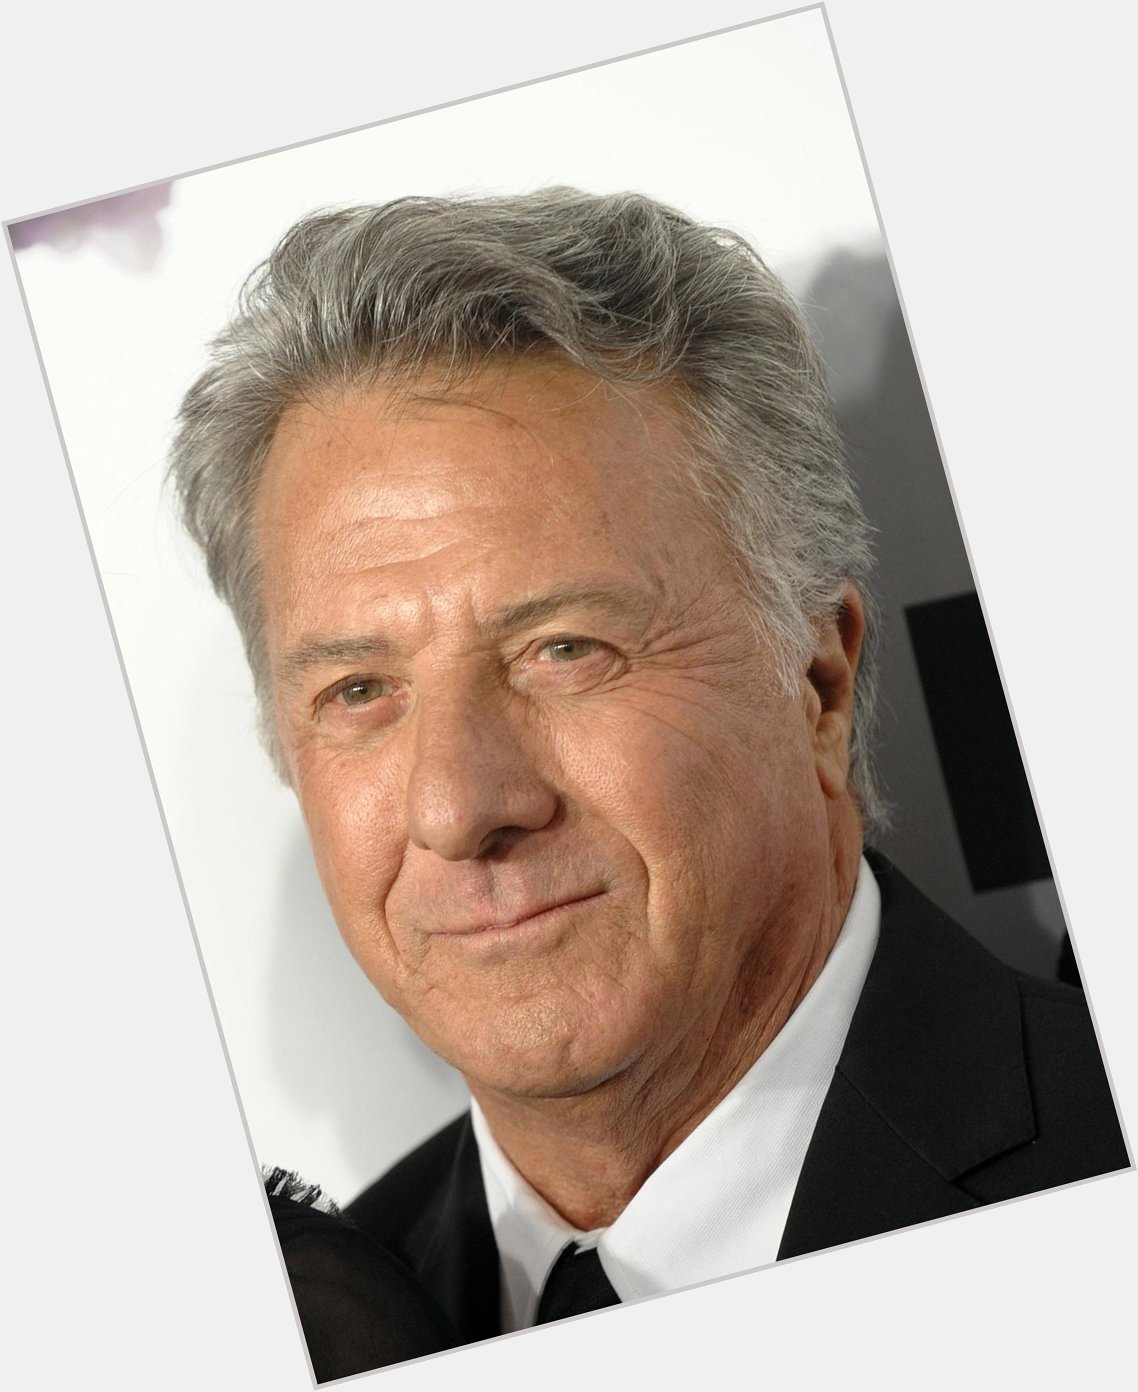 Happy 78th Birthday, Dustin Hoffman! He has been in films like The Graduate,Tootsie, Rain Man, Family Business & Hook 